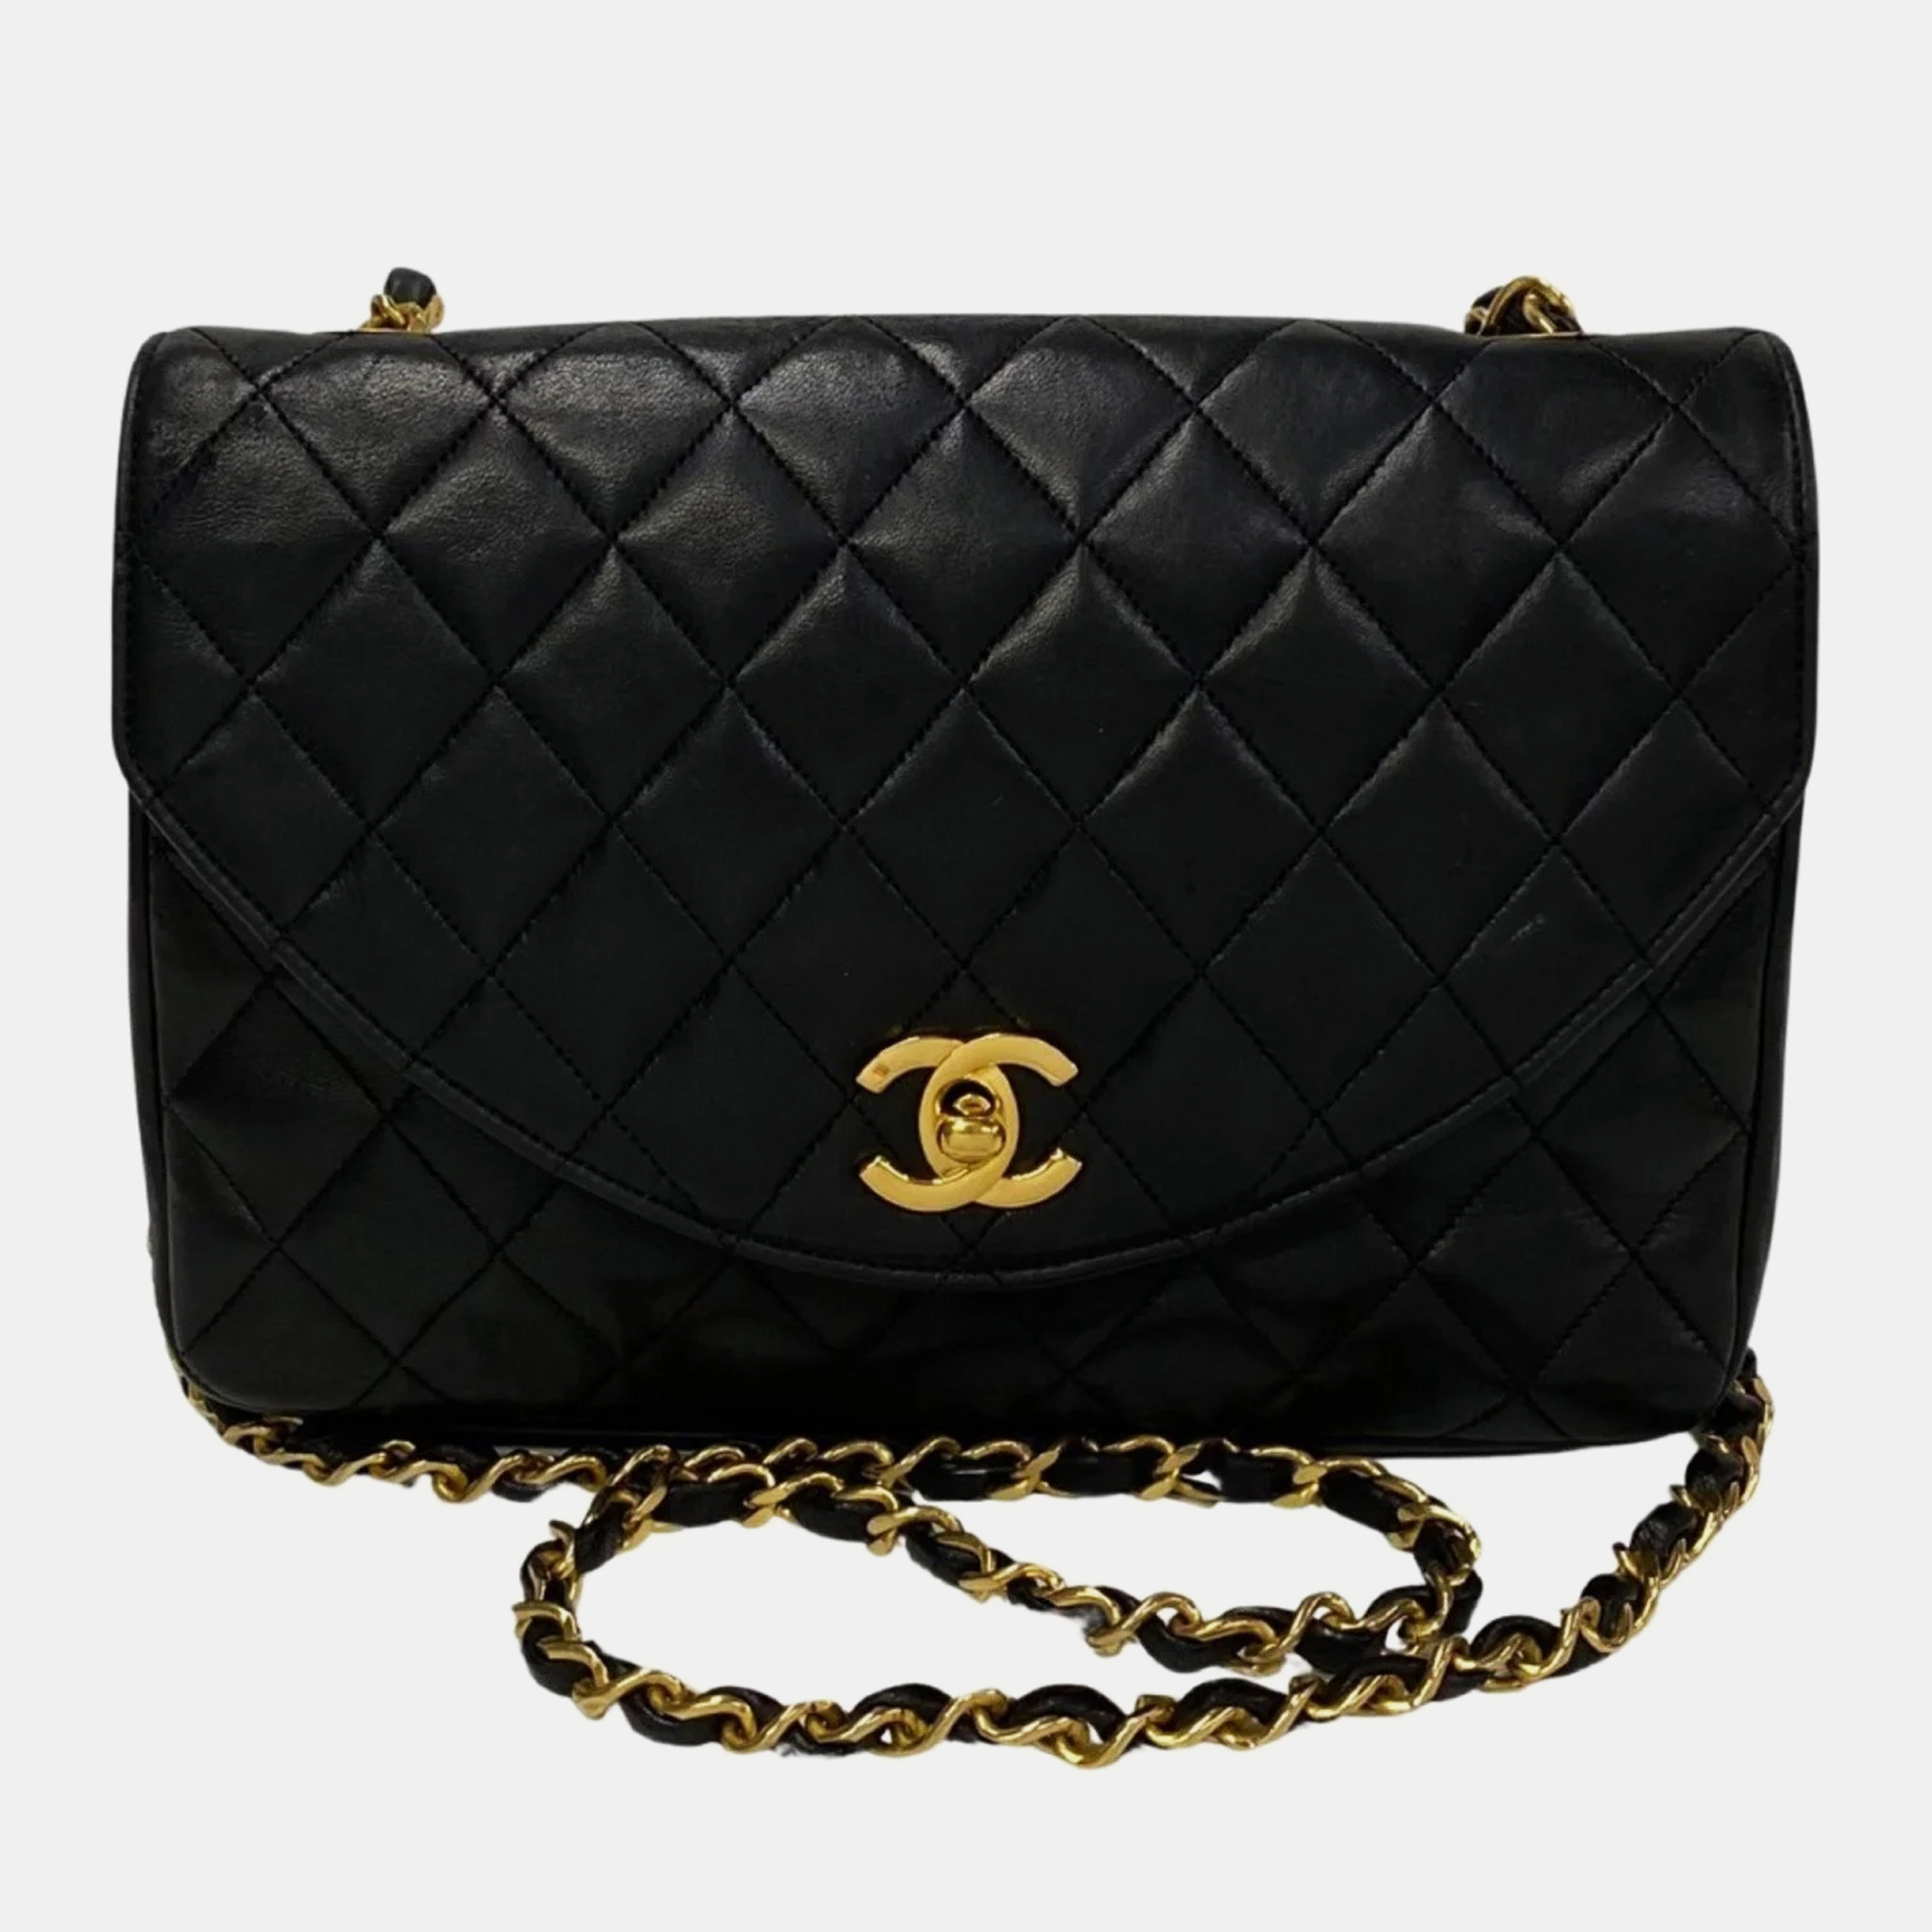 Chanel black leather vintage classic round flap bag